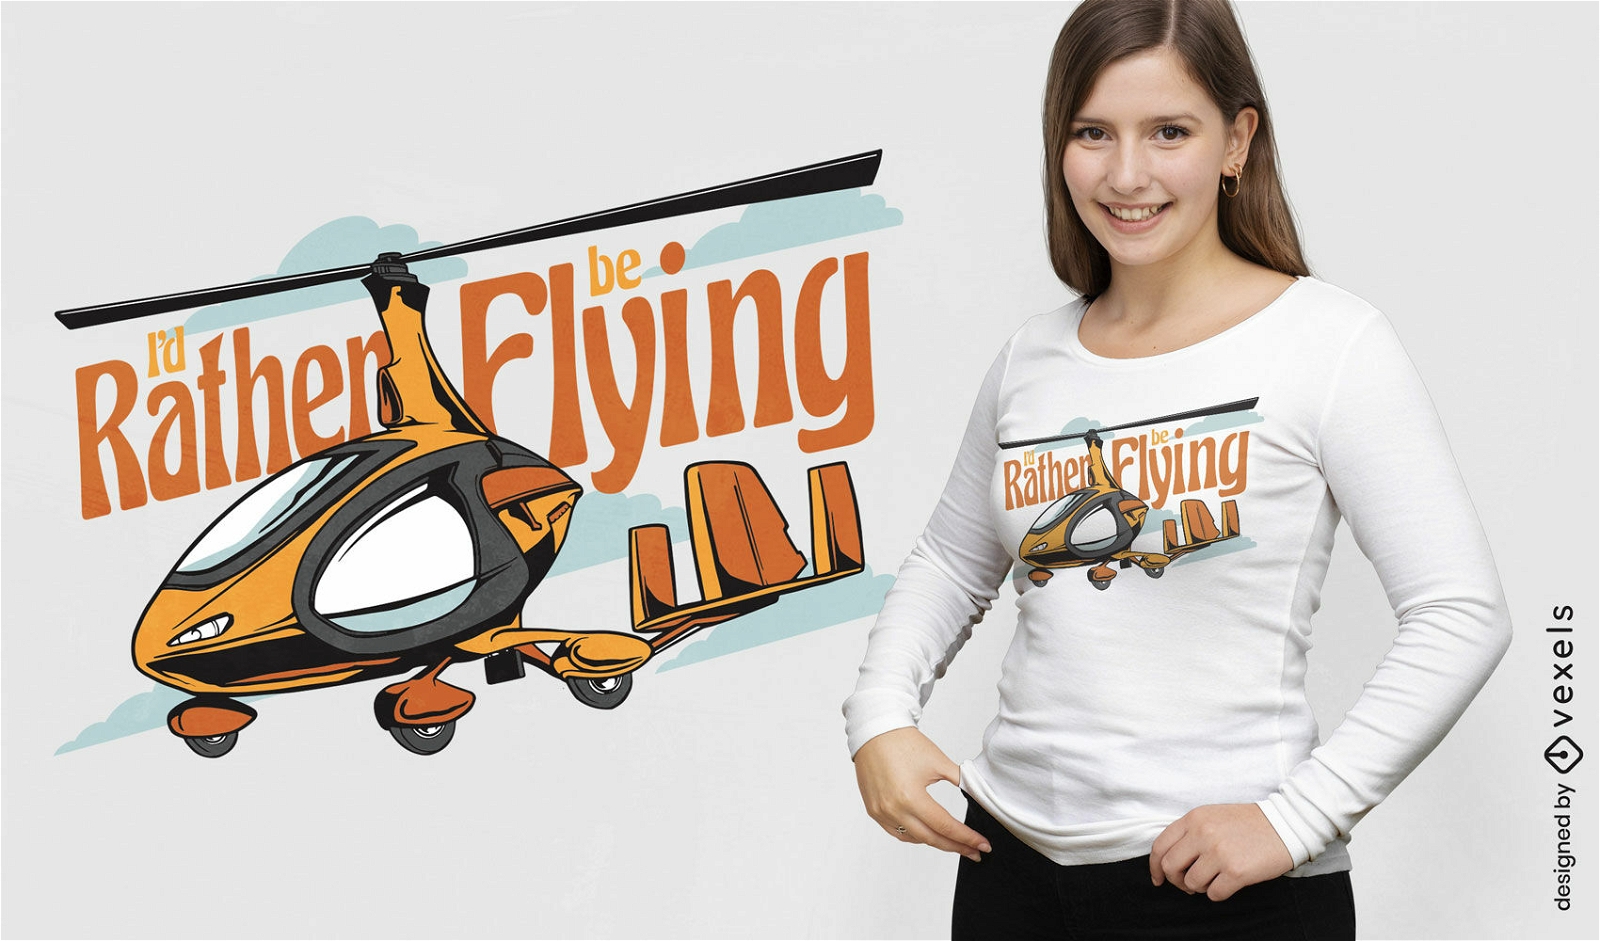 Gyrocopter flying machine t-shirt design